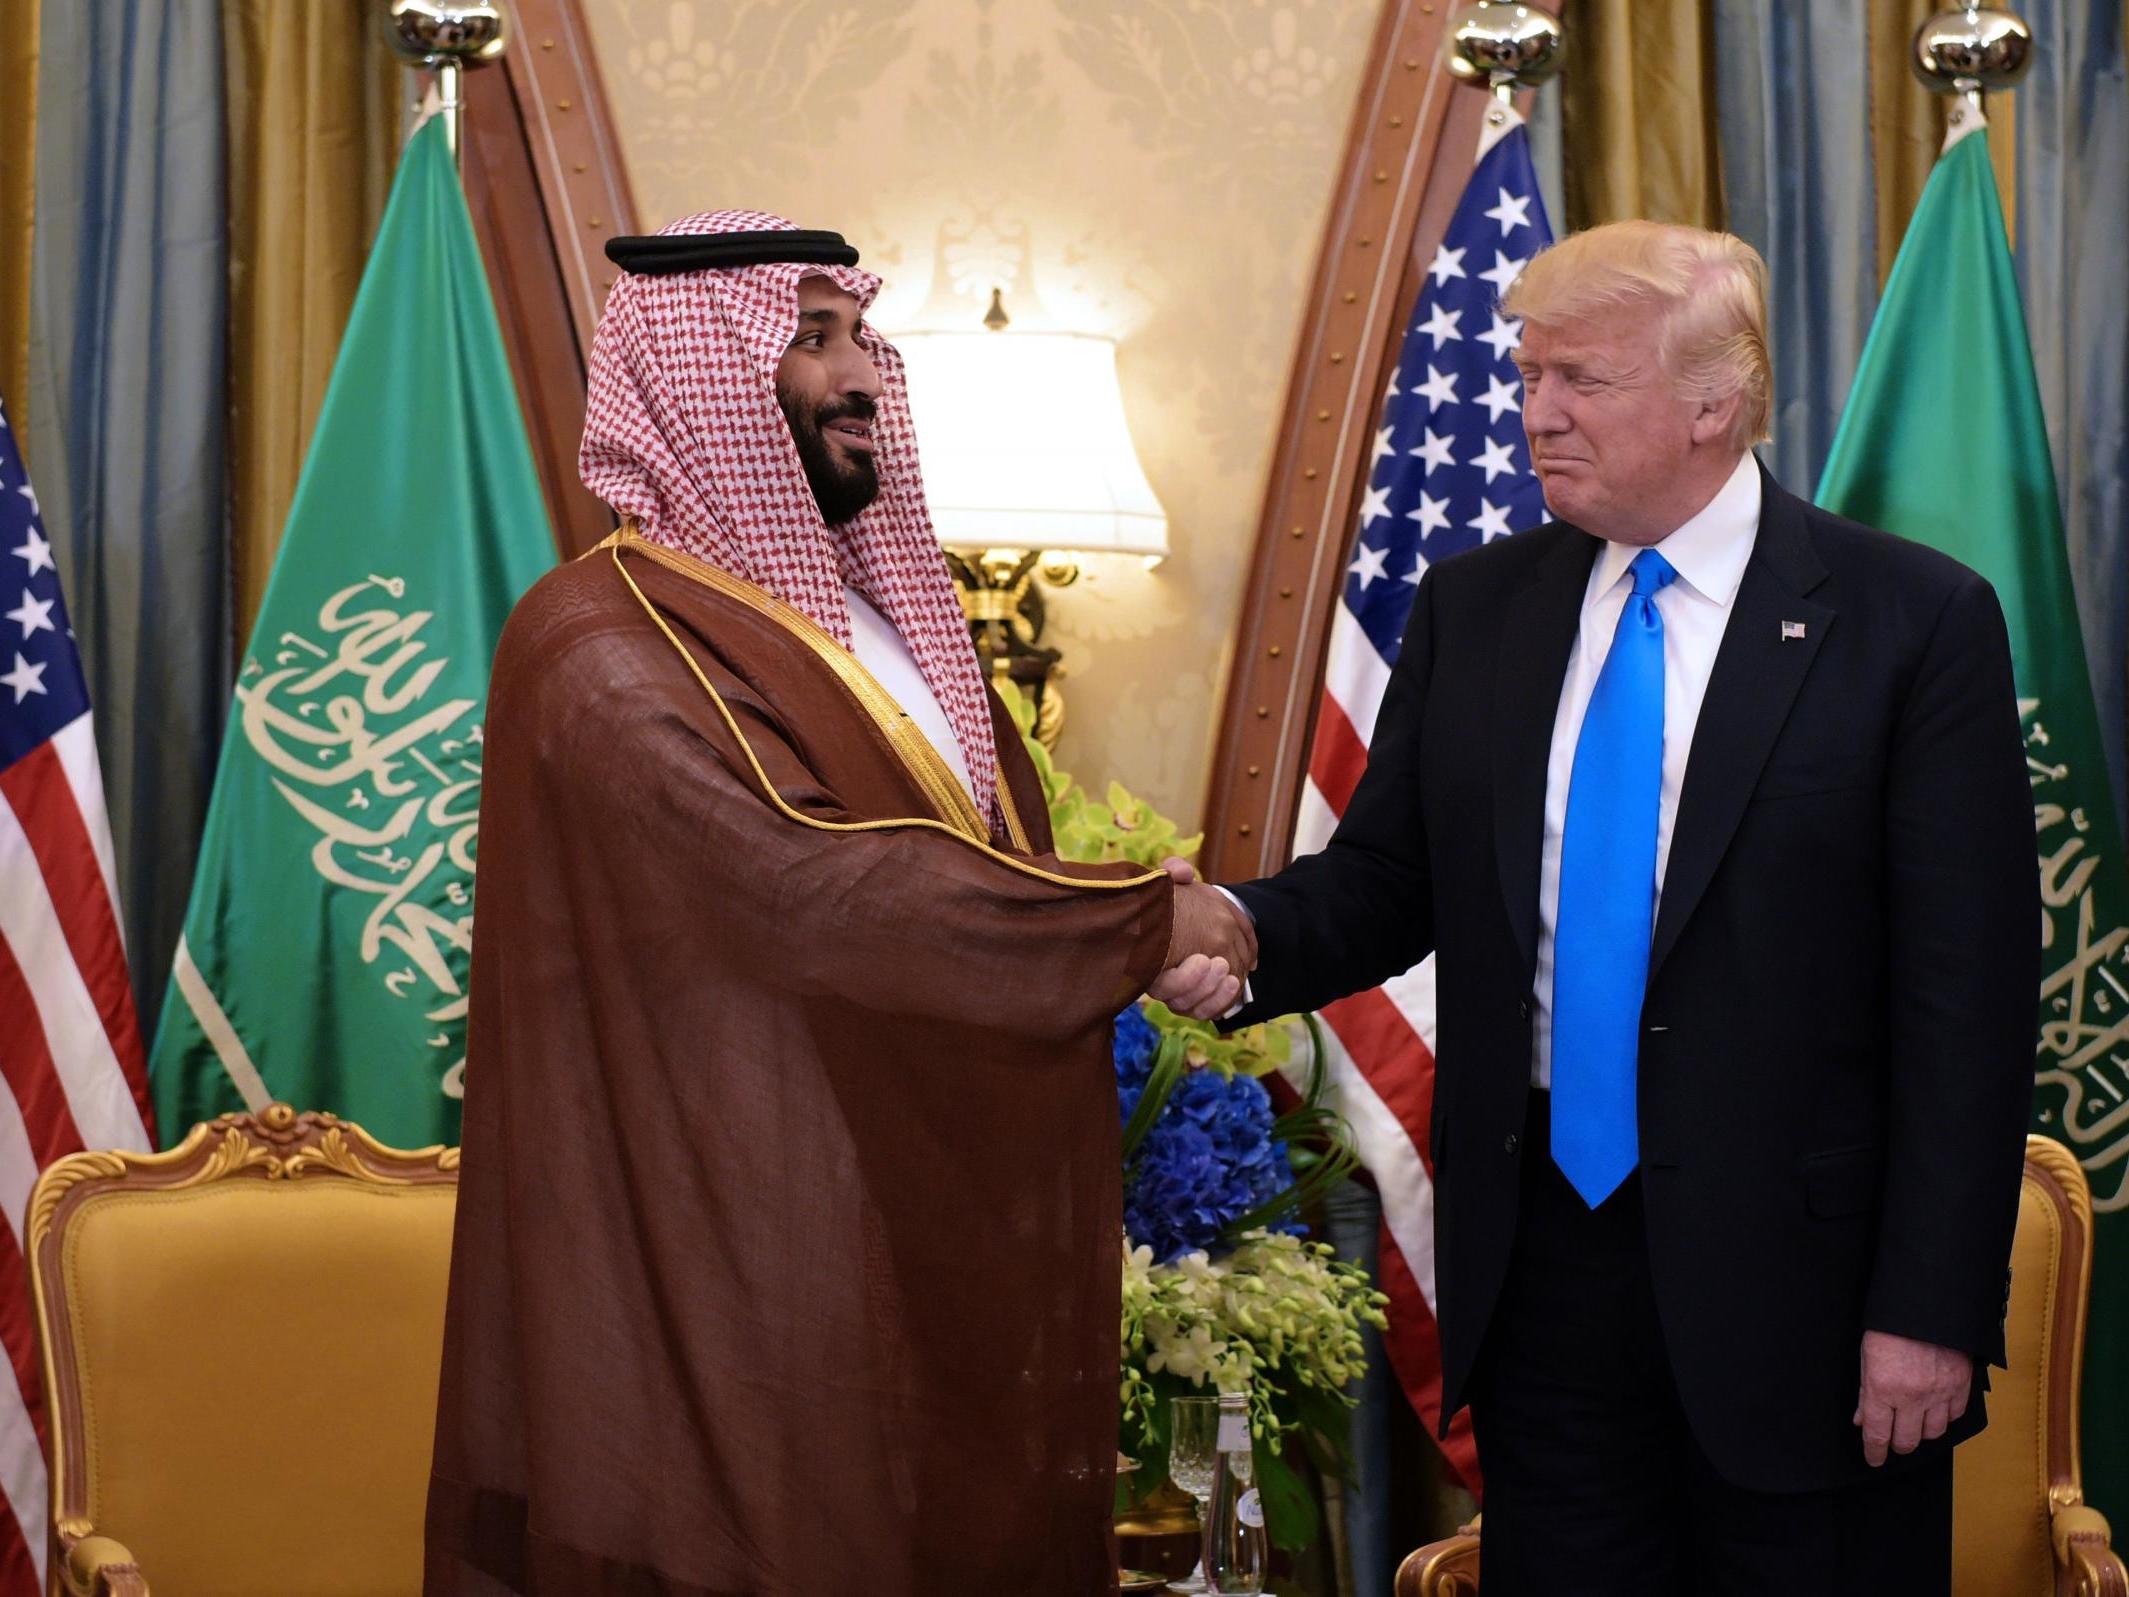 US President Donald Trump and Saudi Deputy Crown Prince Mohammad bin Salman al-Saud take part in a bilateral meeting at a hotel in Riyadh on May 20, 2017.